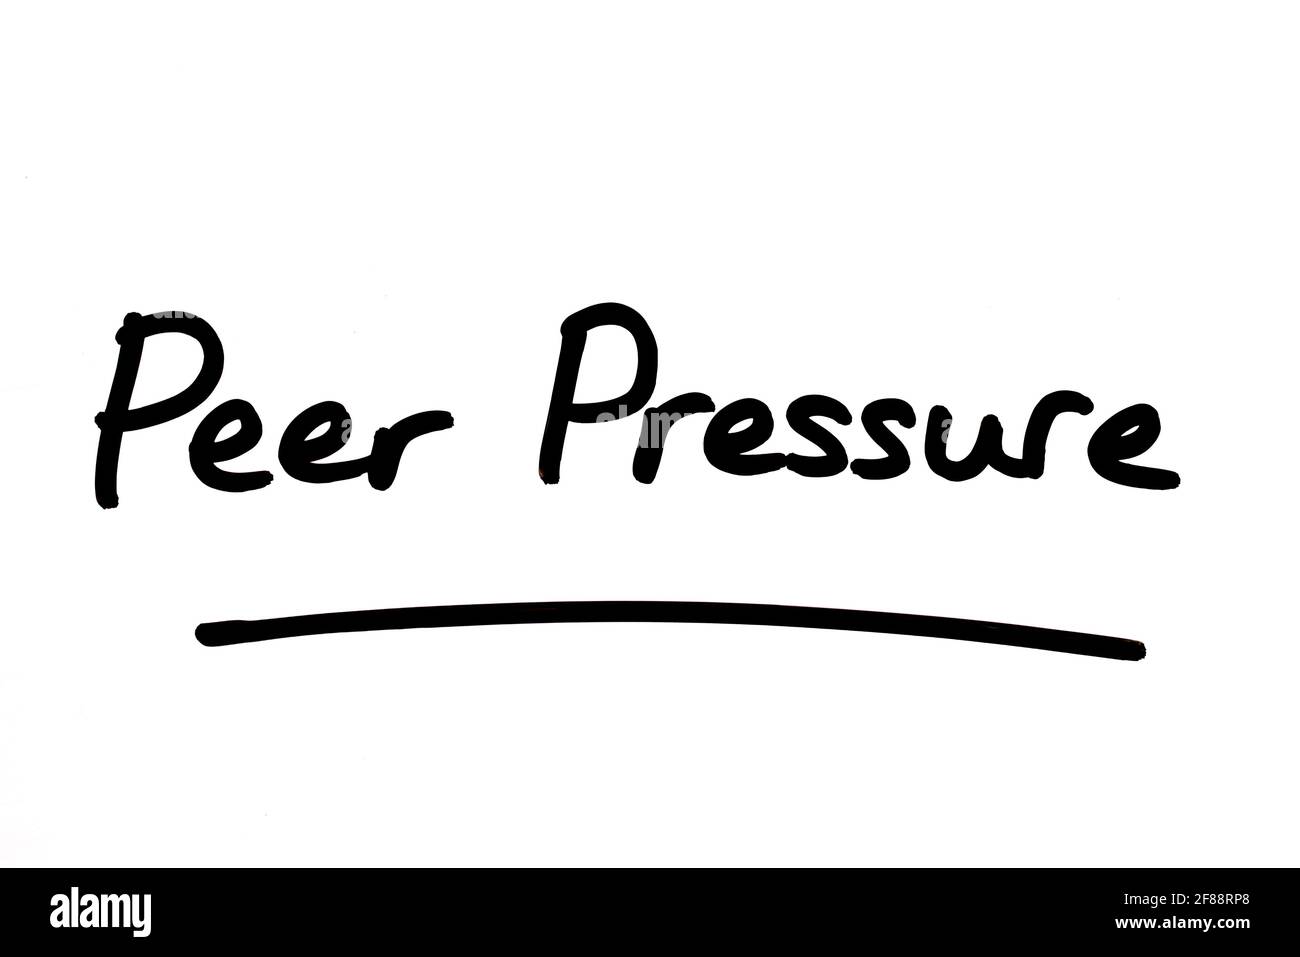 Peer Pressure, handwritten on a white background. Stock Photo